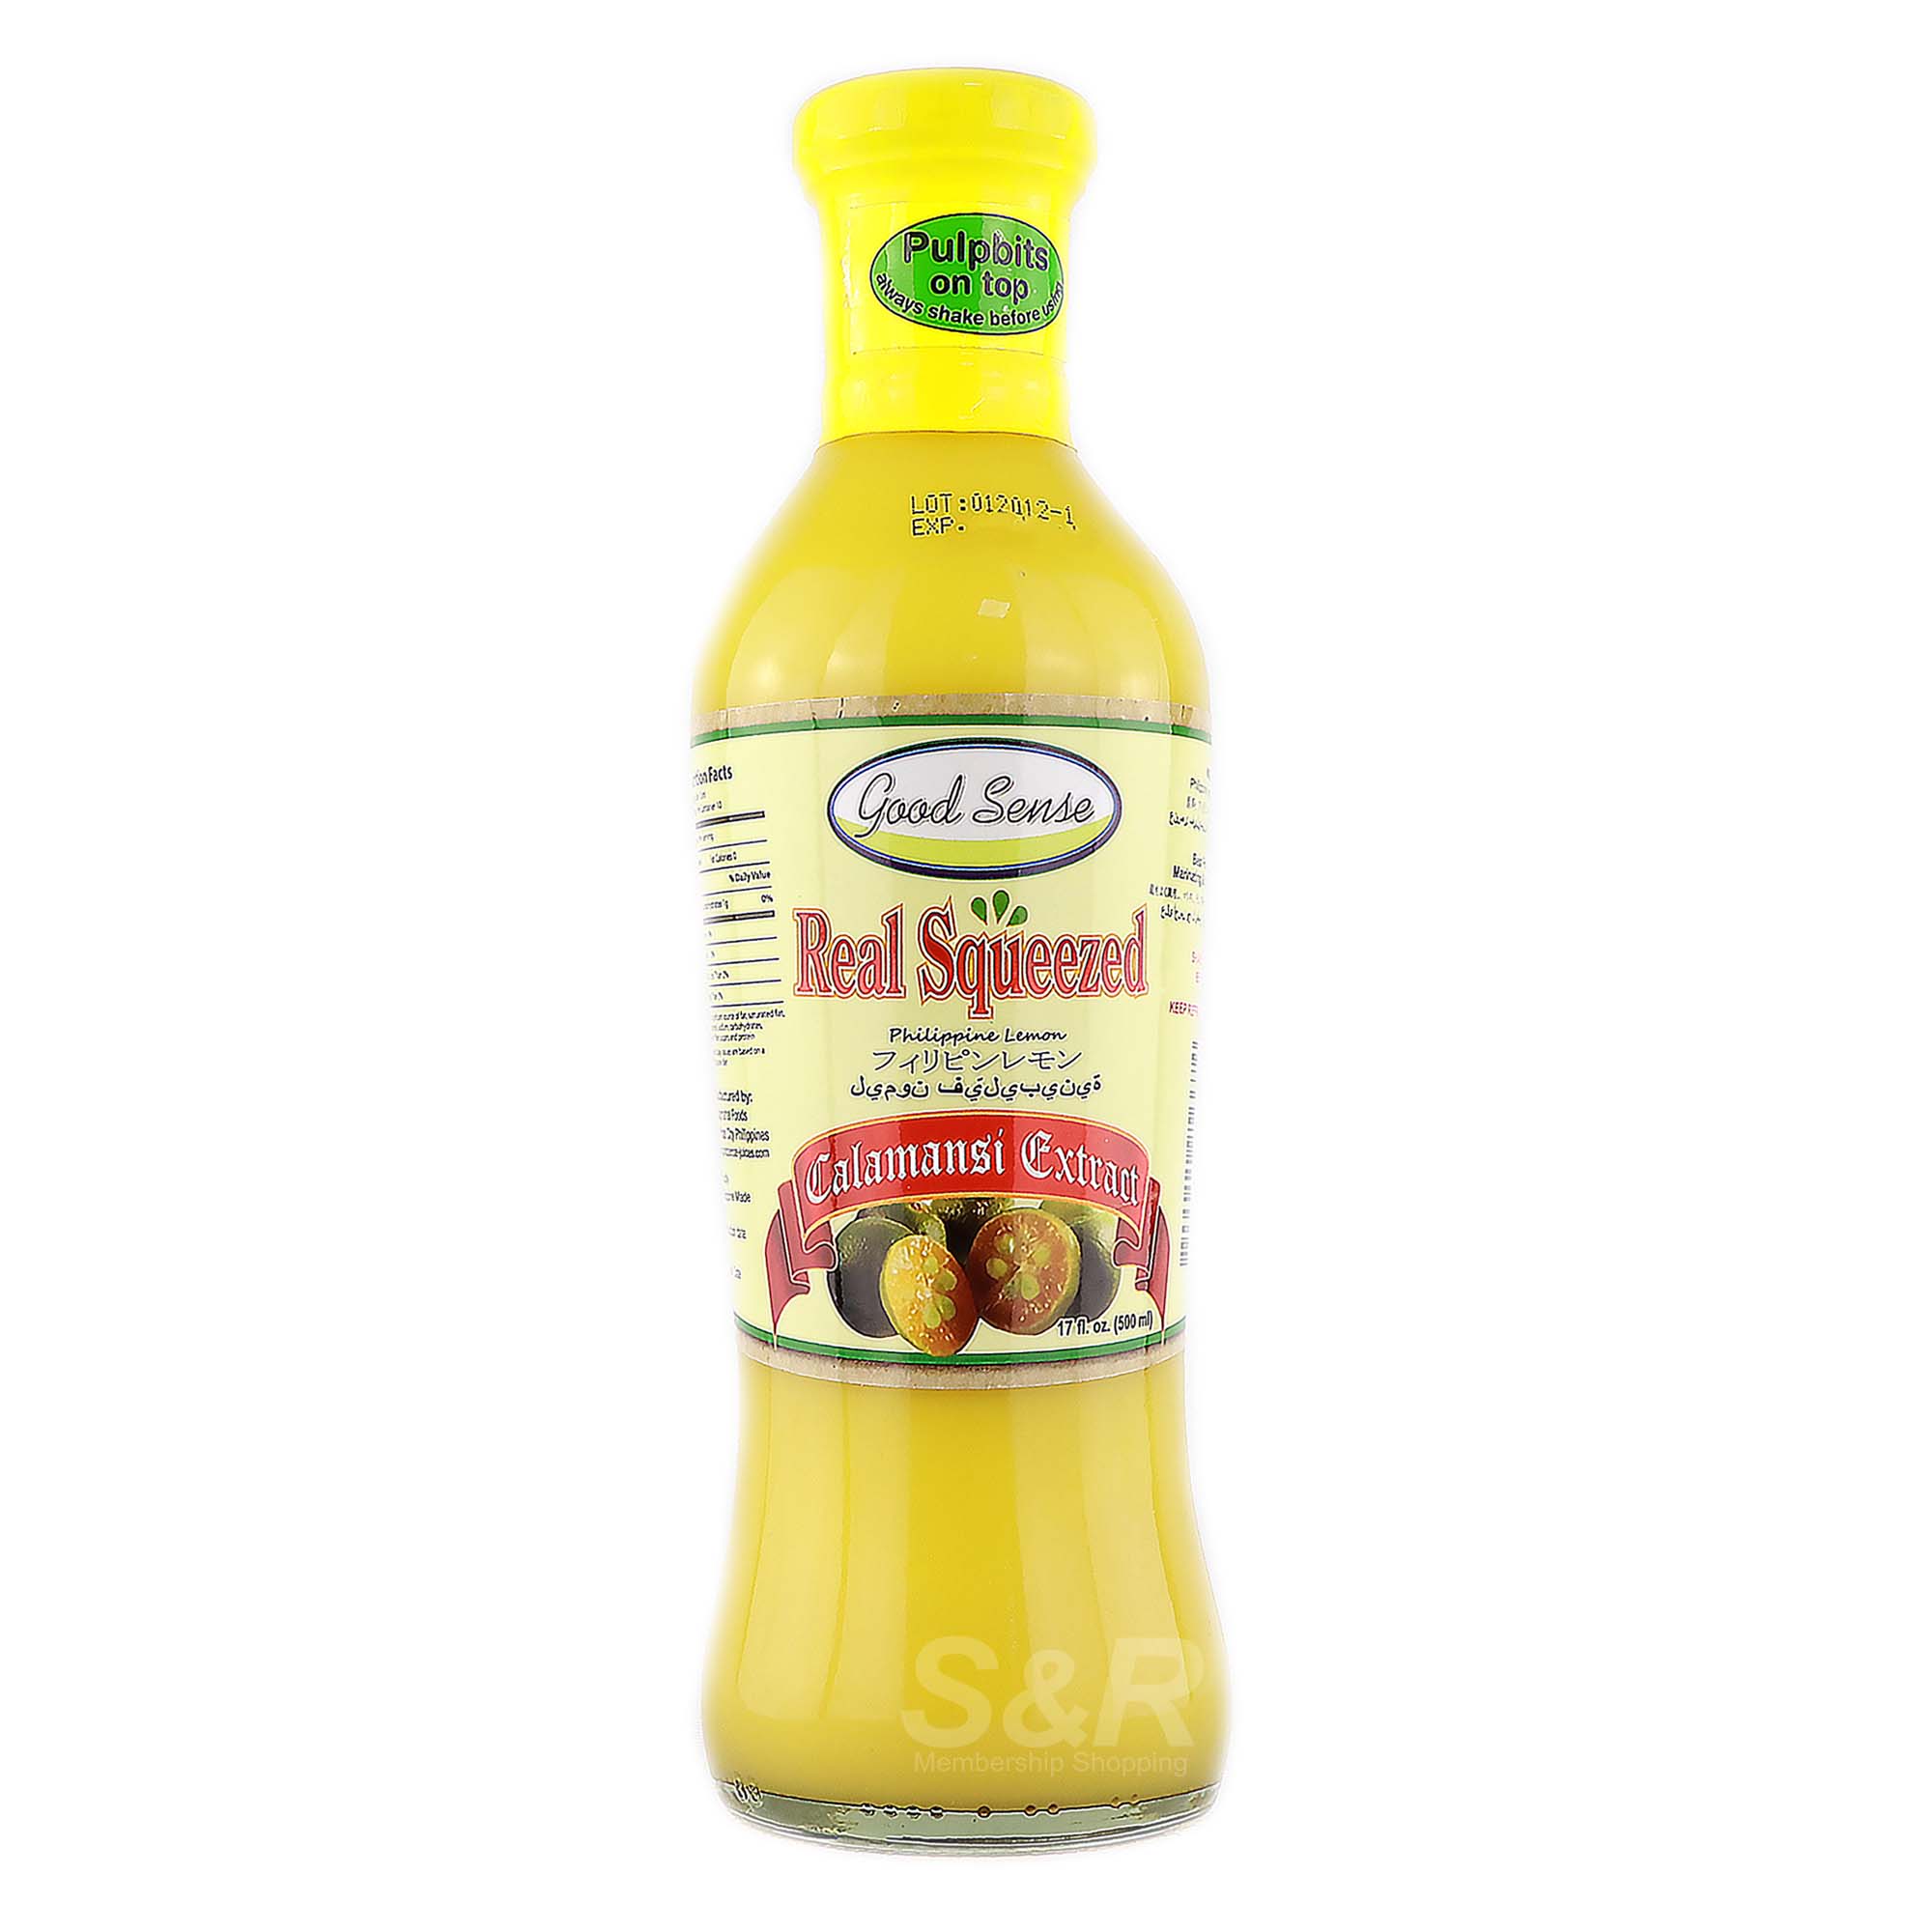 Good Sense Real Squeezed Philippine Lemon Calamansi Extract 500mL